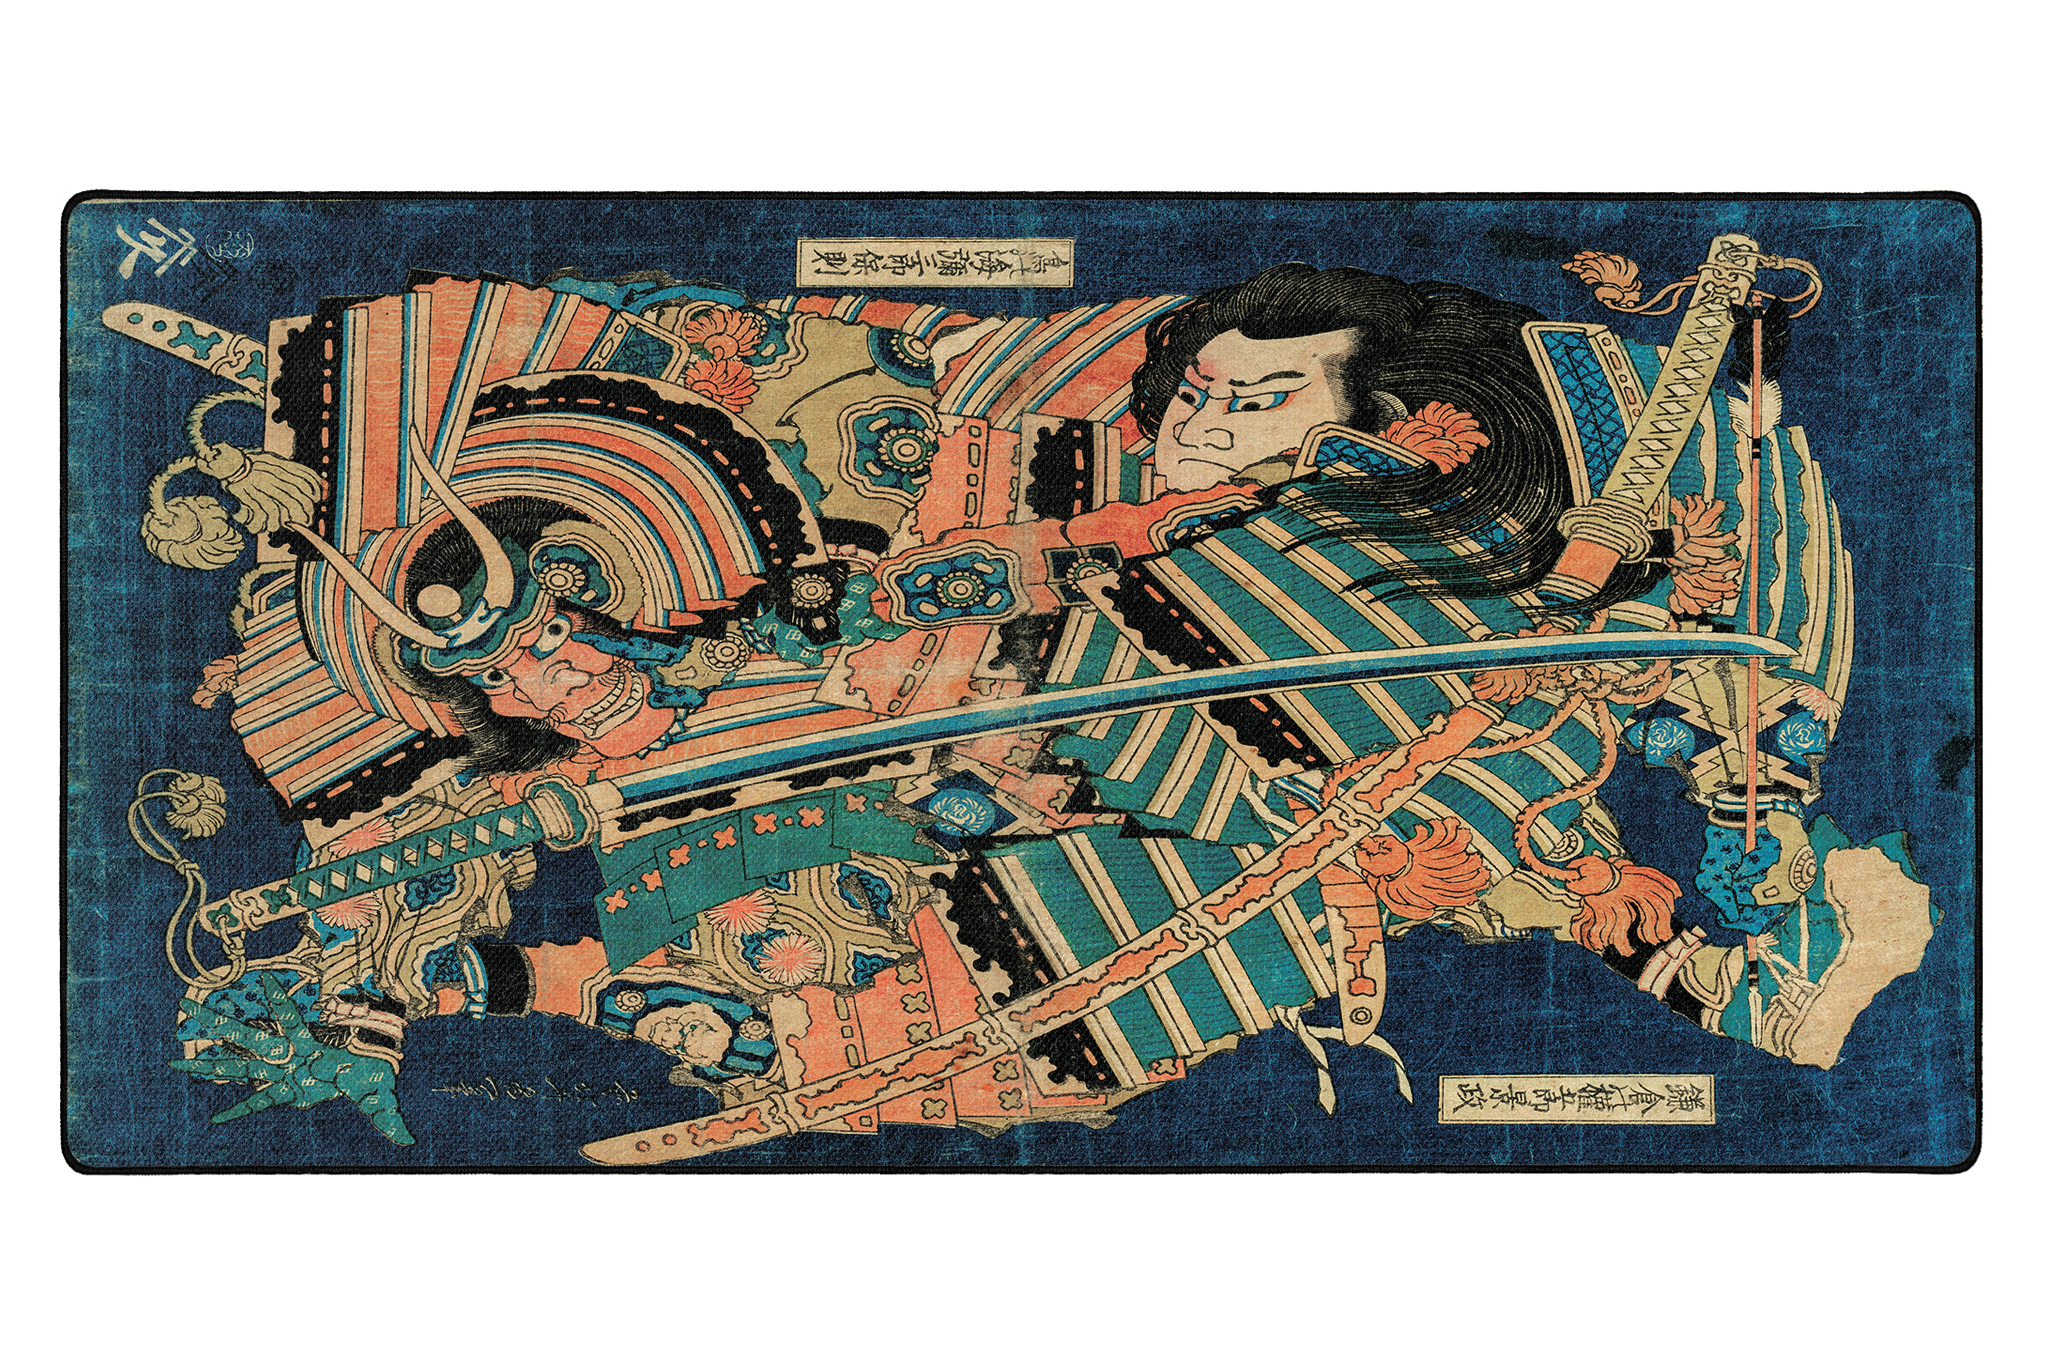 Kamakura no Gengoro, by Hokusai - The Mousepad Company